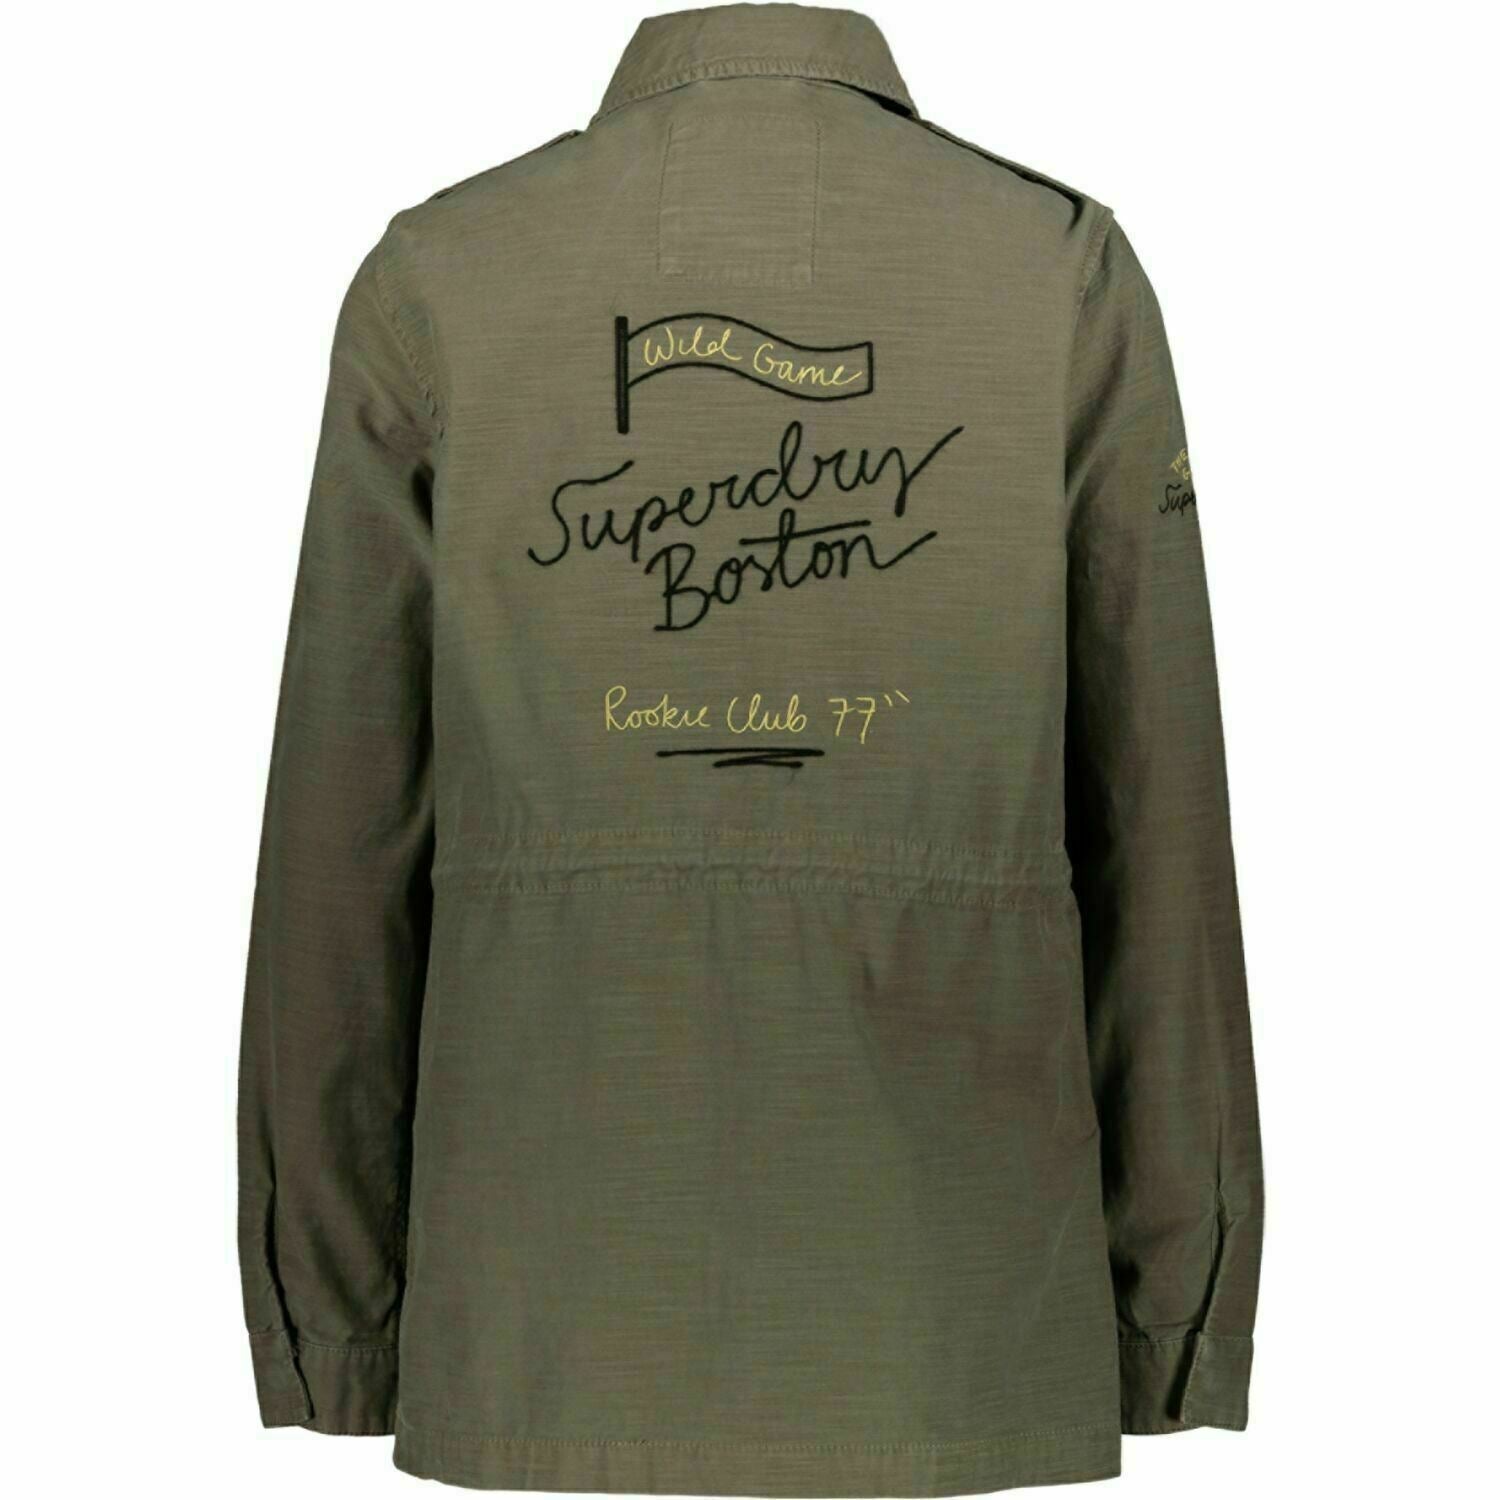 SUPERDRY Women's SLUB 4 POCKET ROOKIE Jacket, Khaki Green, size S /UK 10